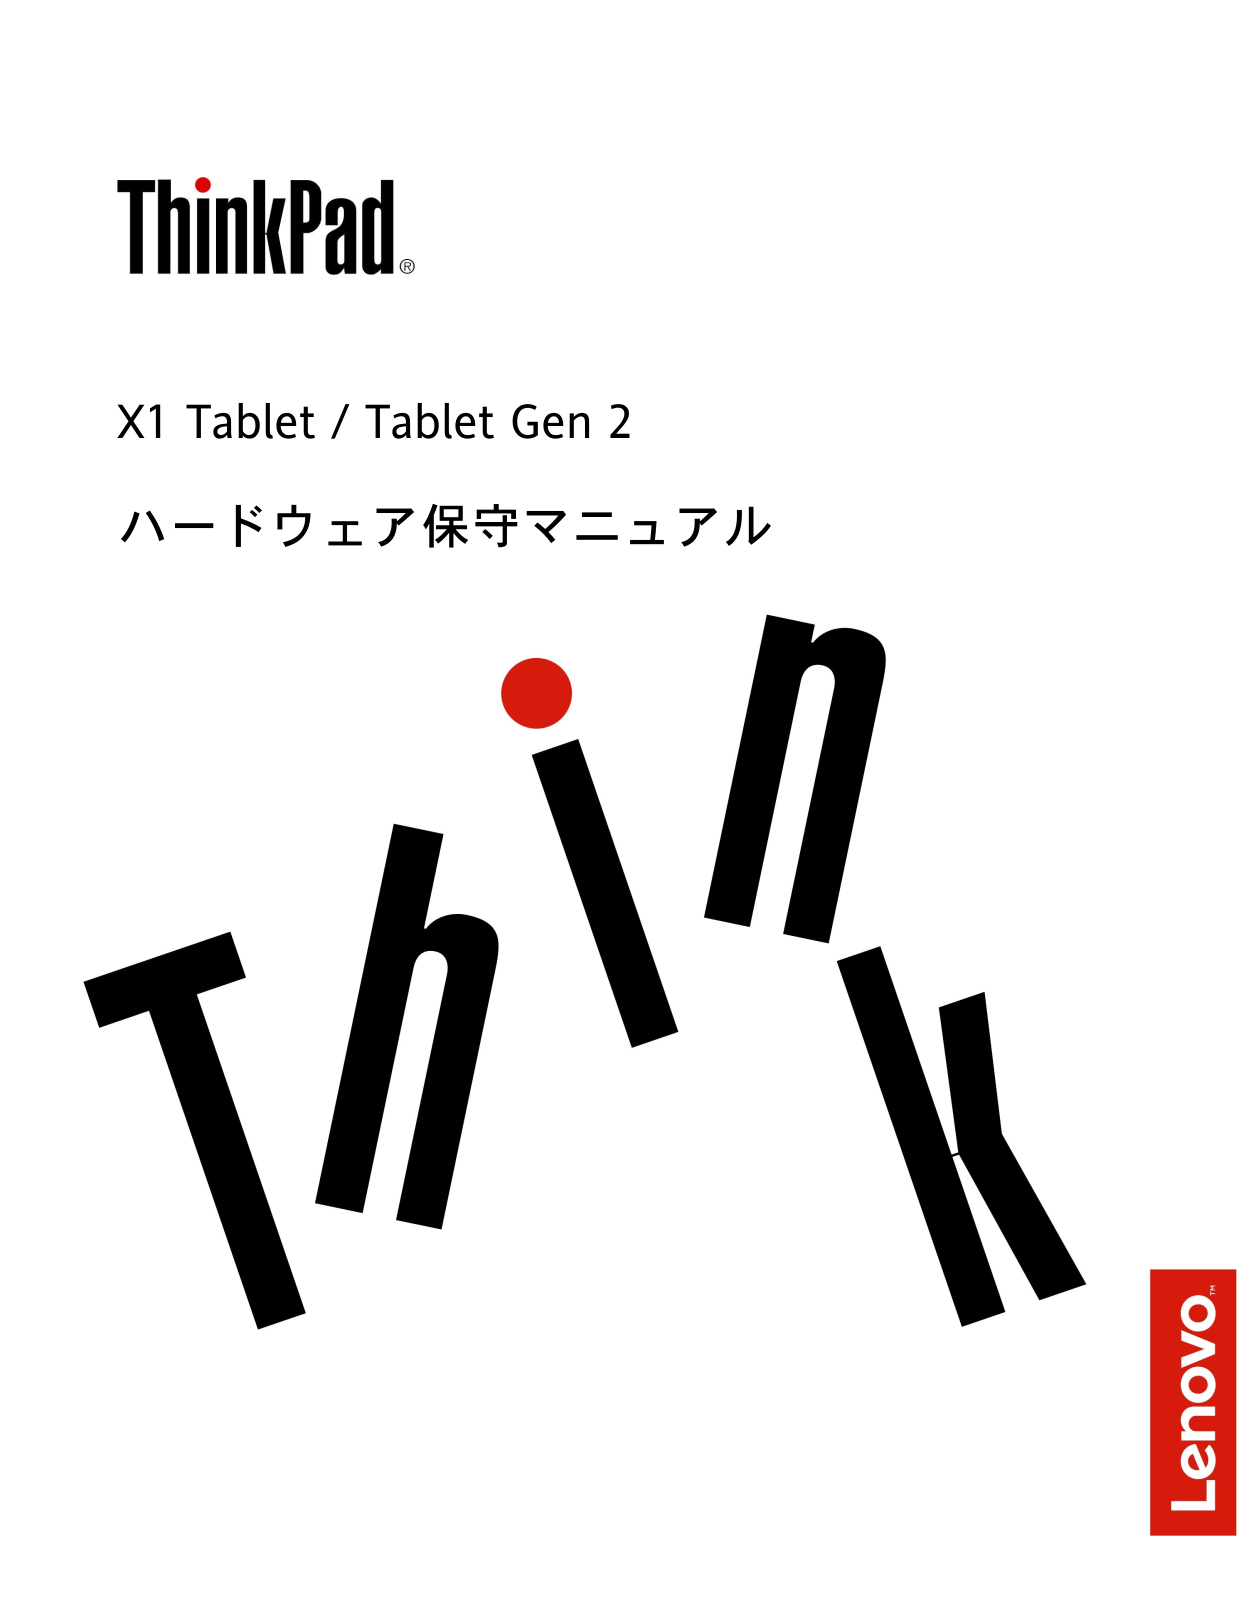 Lenovo ThinkPad X1 Tablet, ThinkPad X1 Tablet Gen 2 Hardware maintenance manual